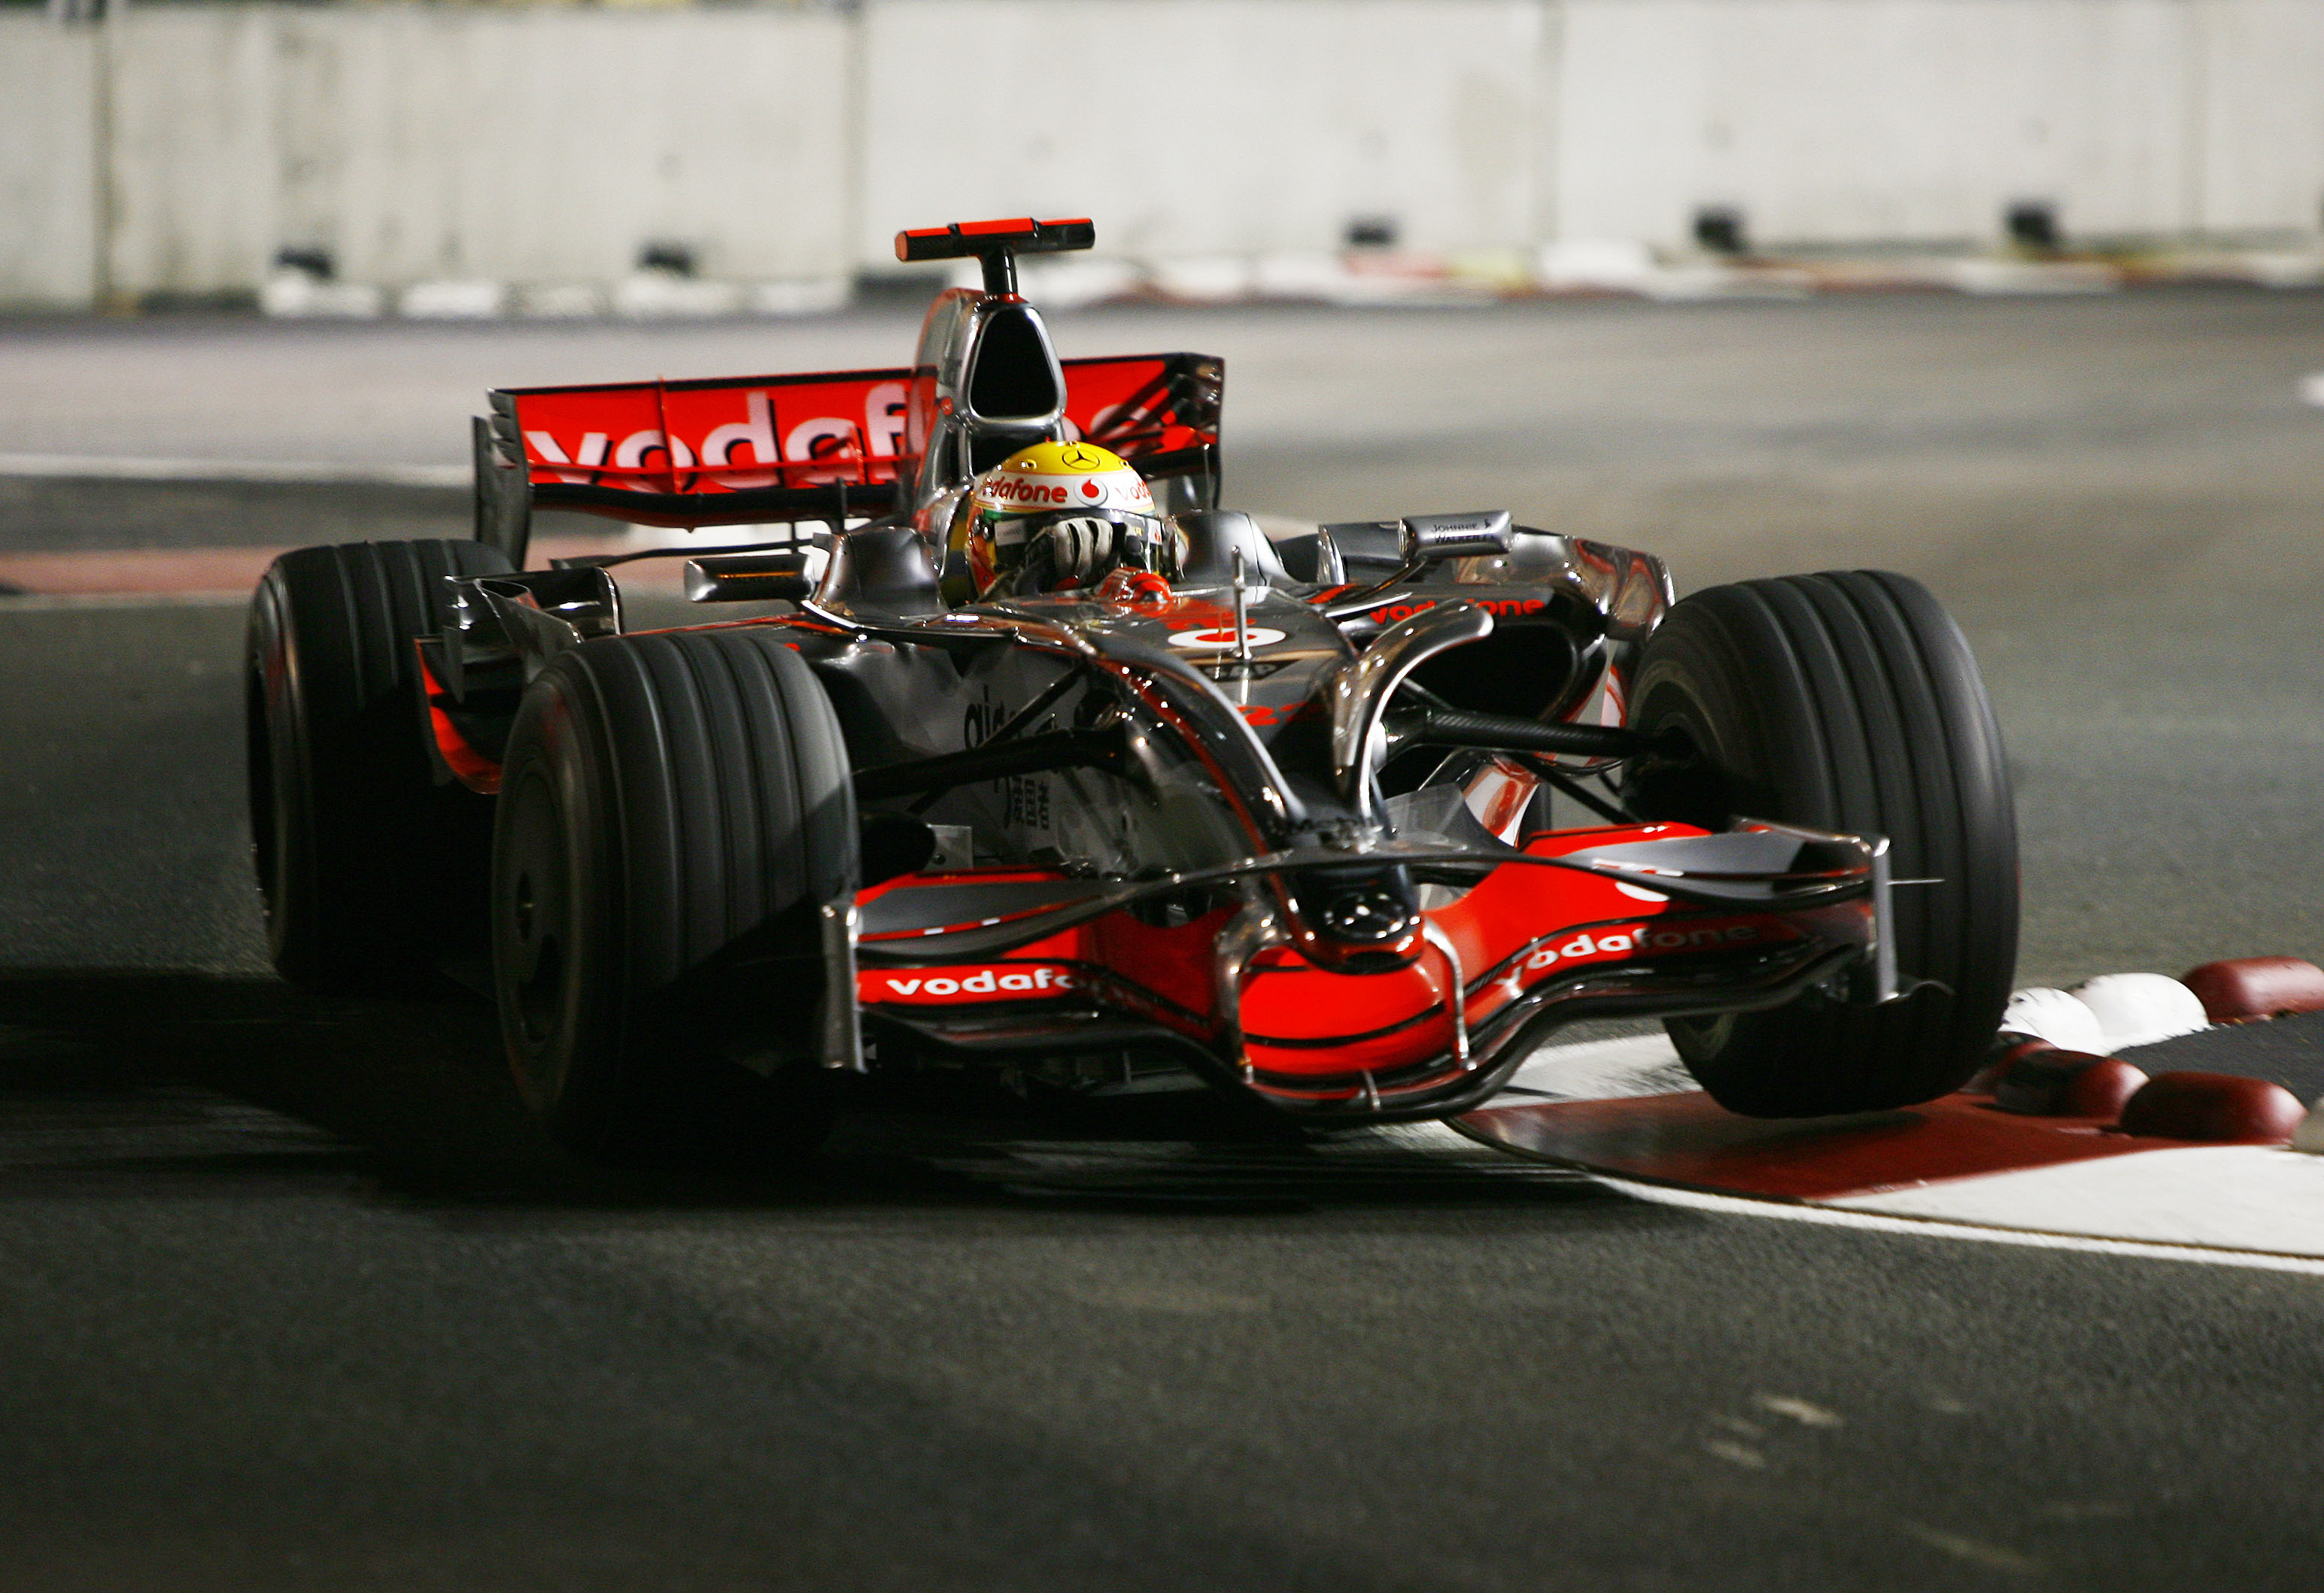 Formula One, vehicles, McLaren - desktop wallpaper